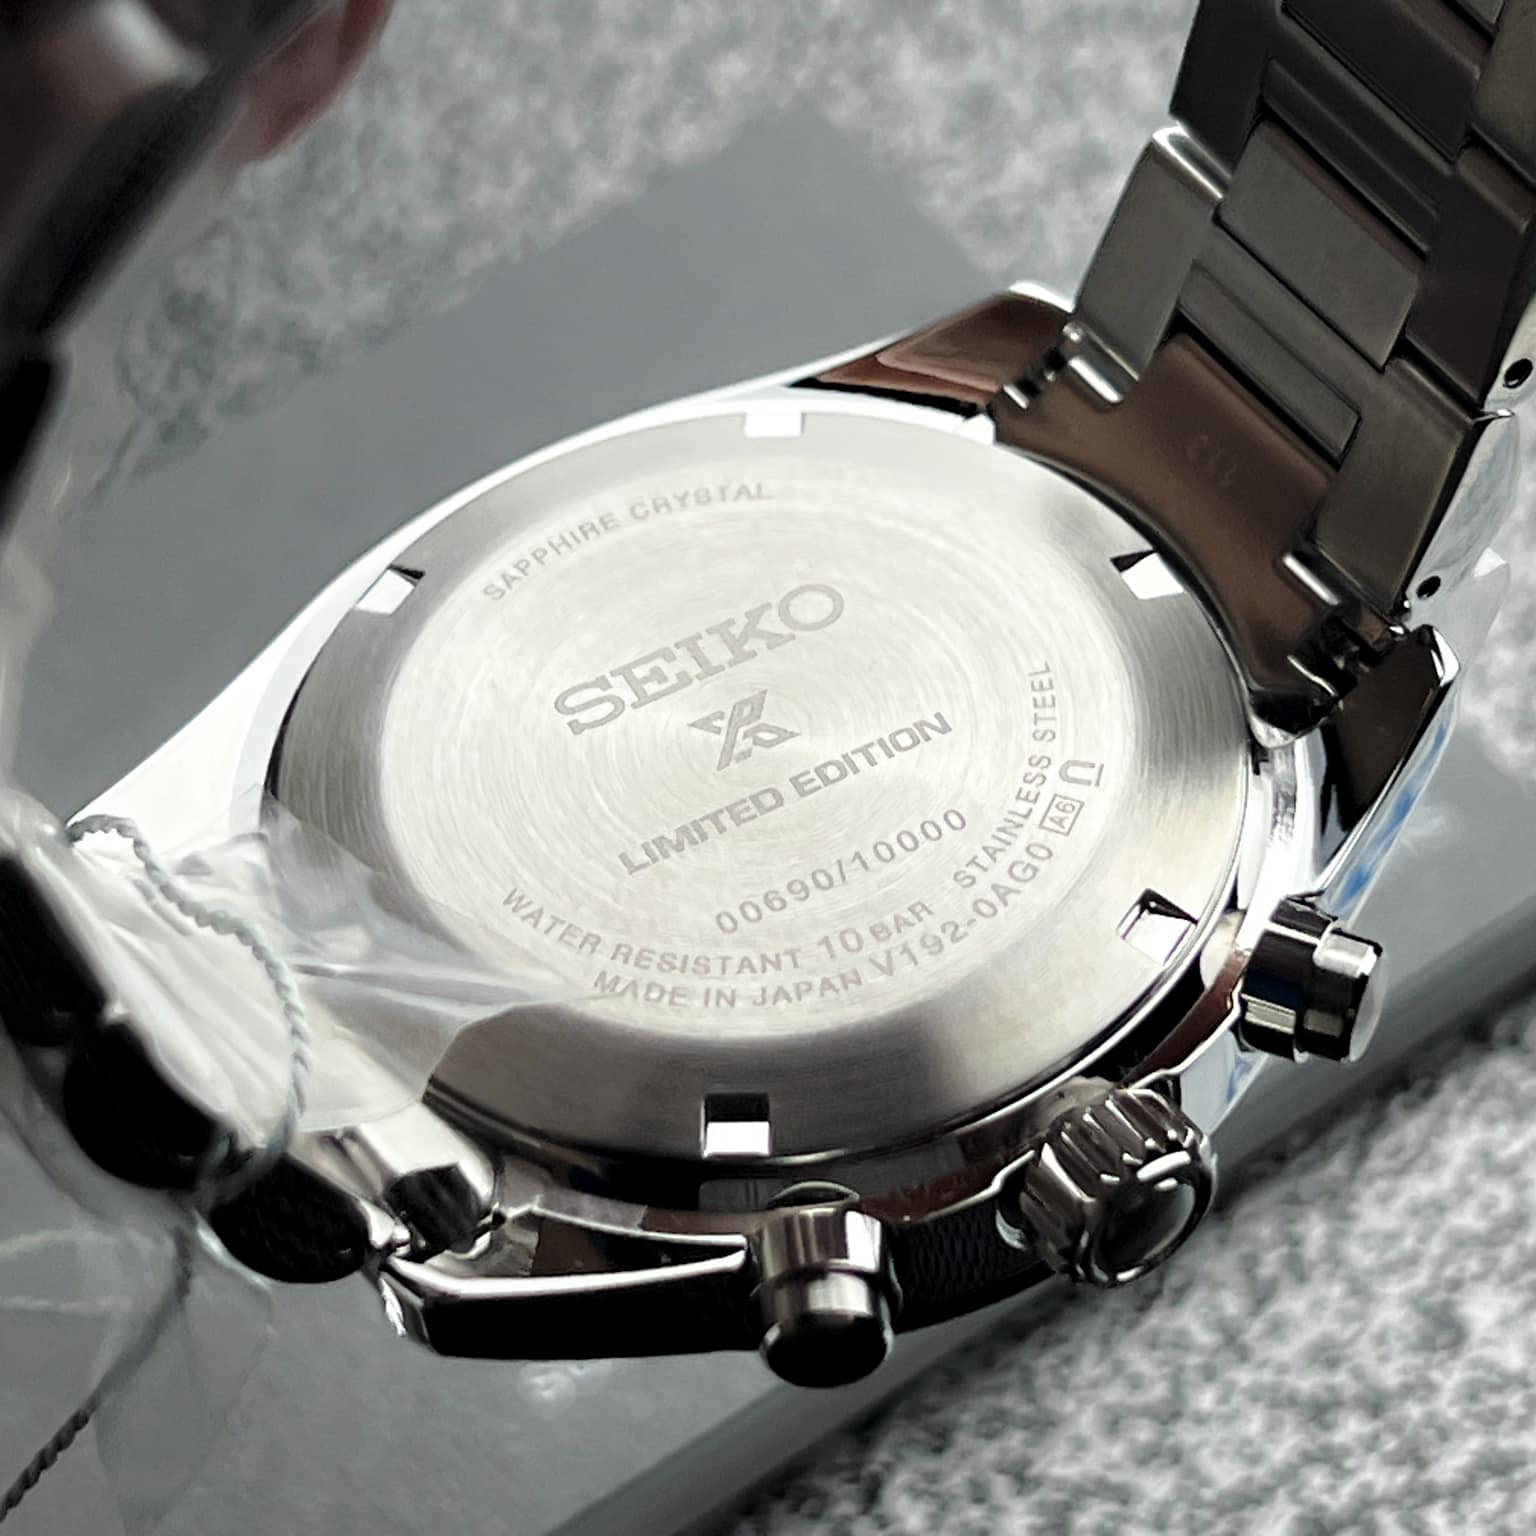 Đồng hồ Seiko SBDL093 (SSC909P1)